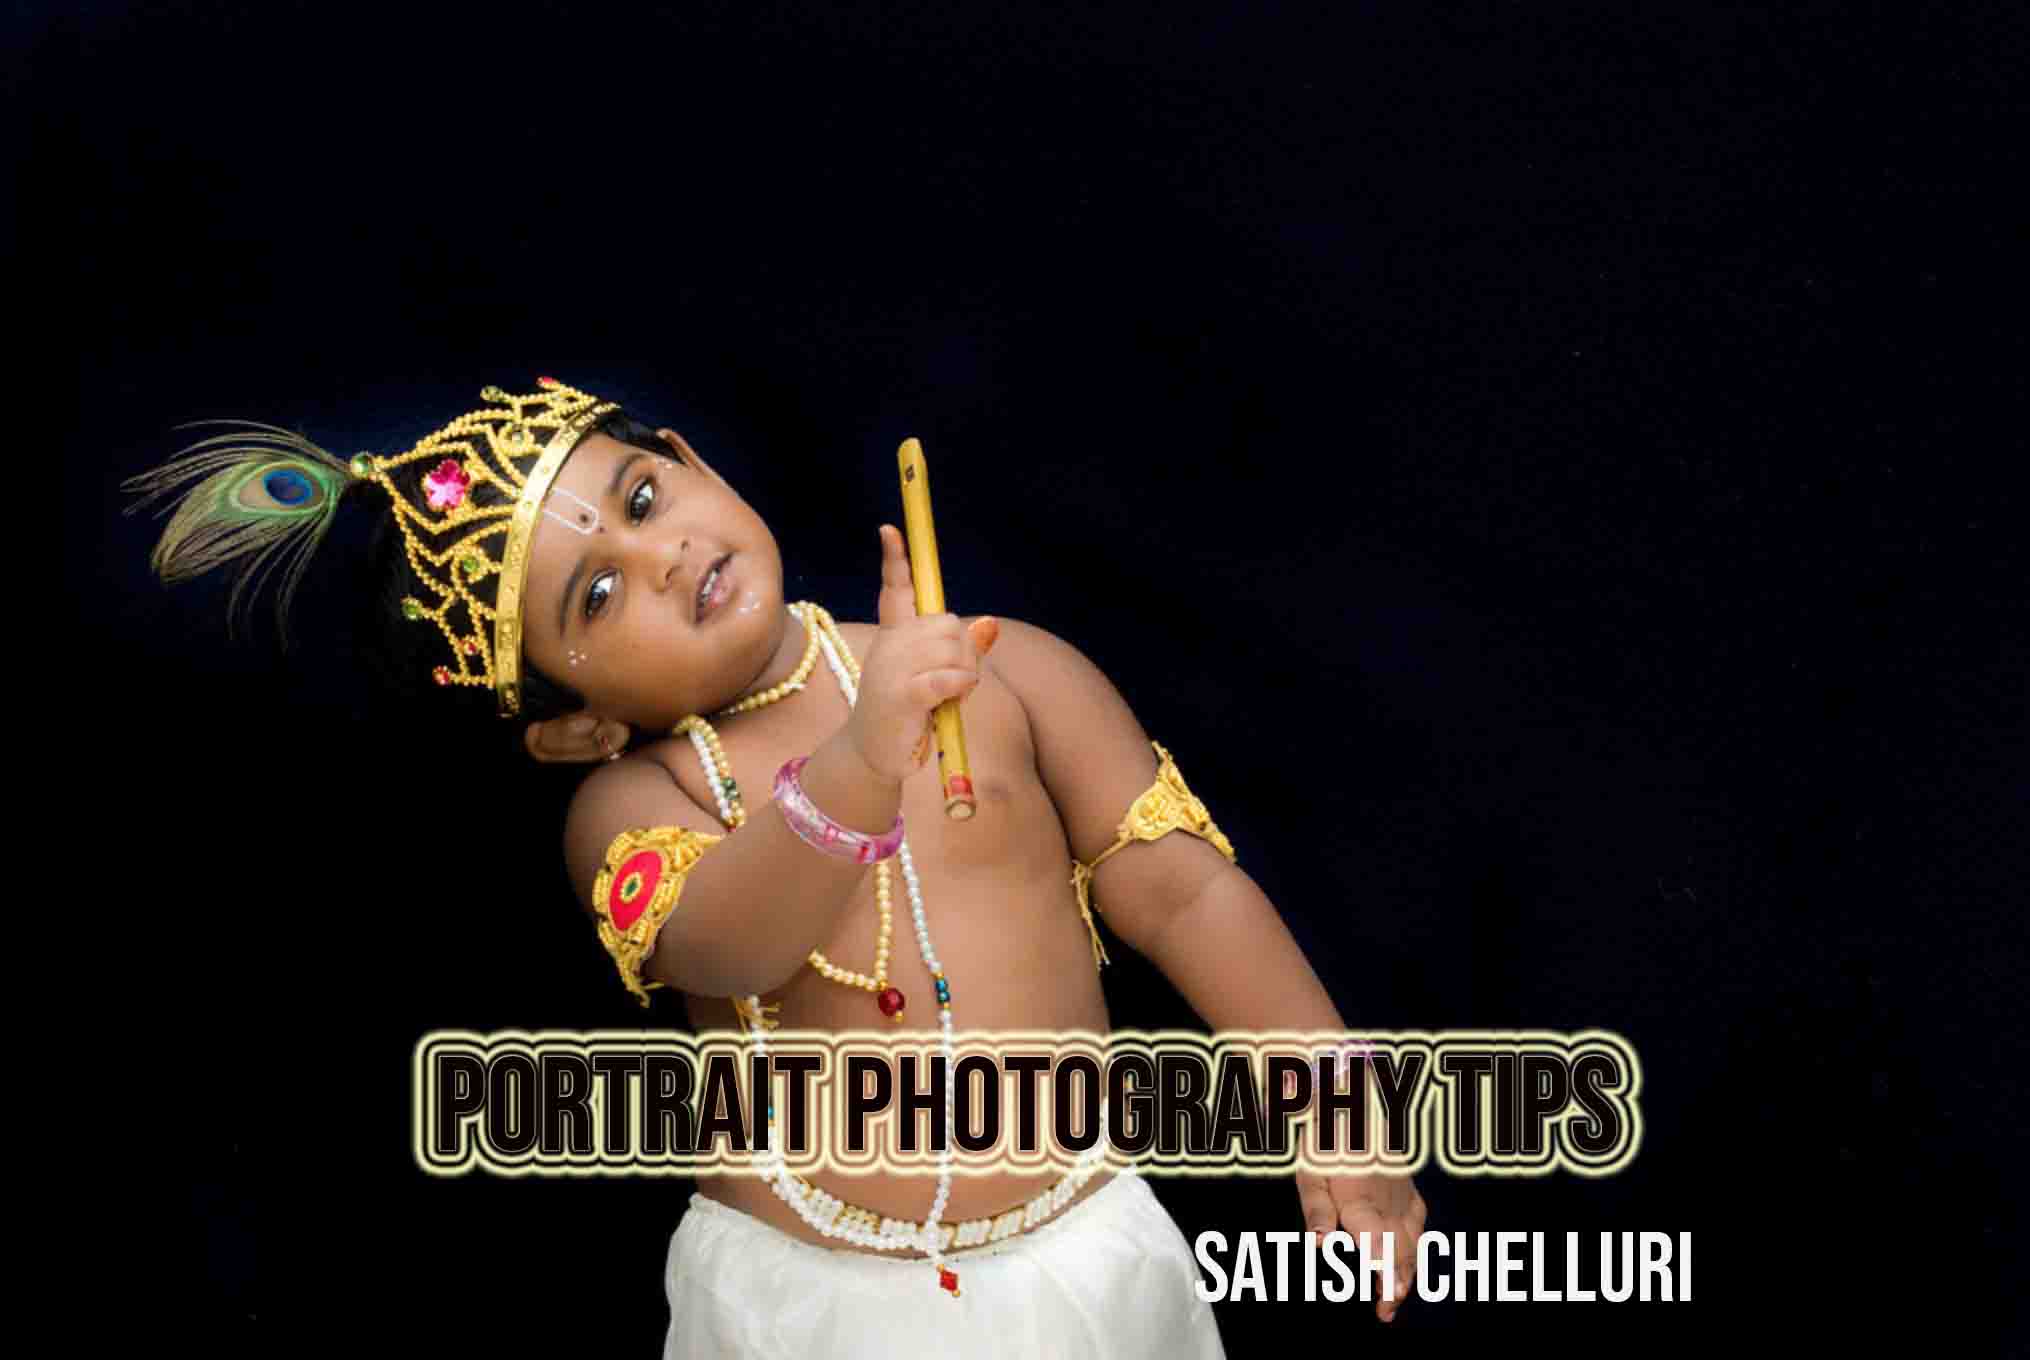 Portrait Photography Tips